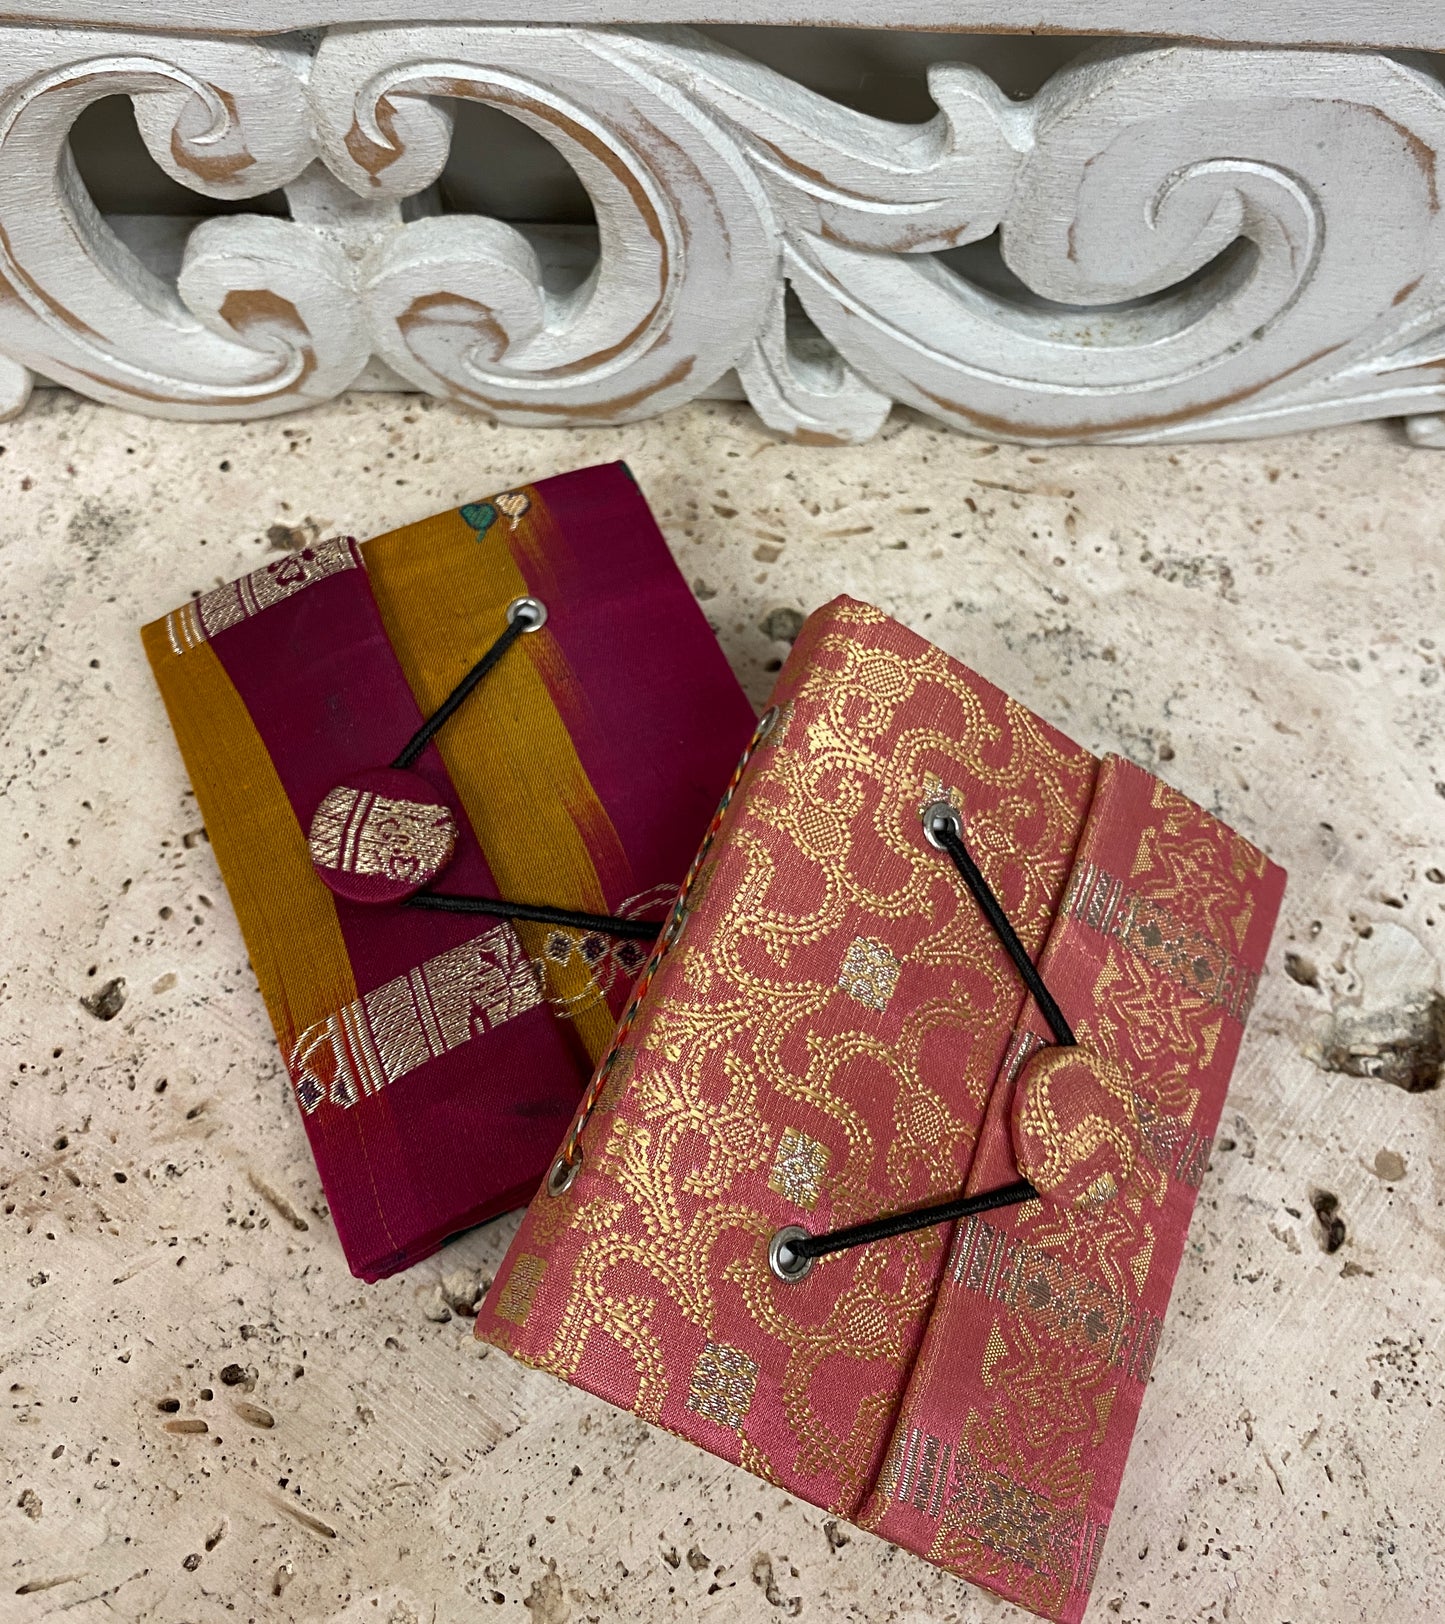 Rajastani Sari Journals 3.5" x 5" from India